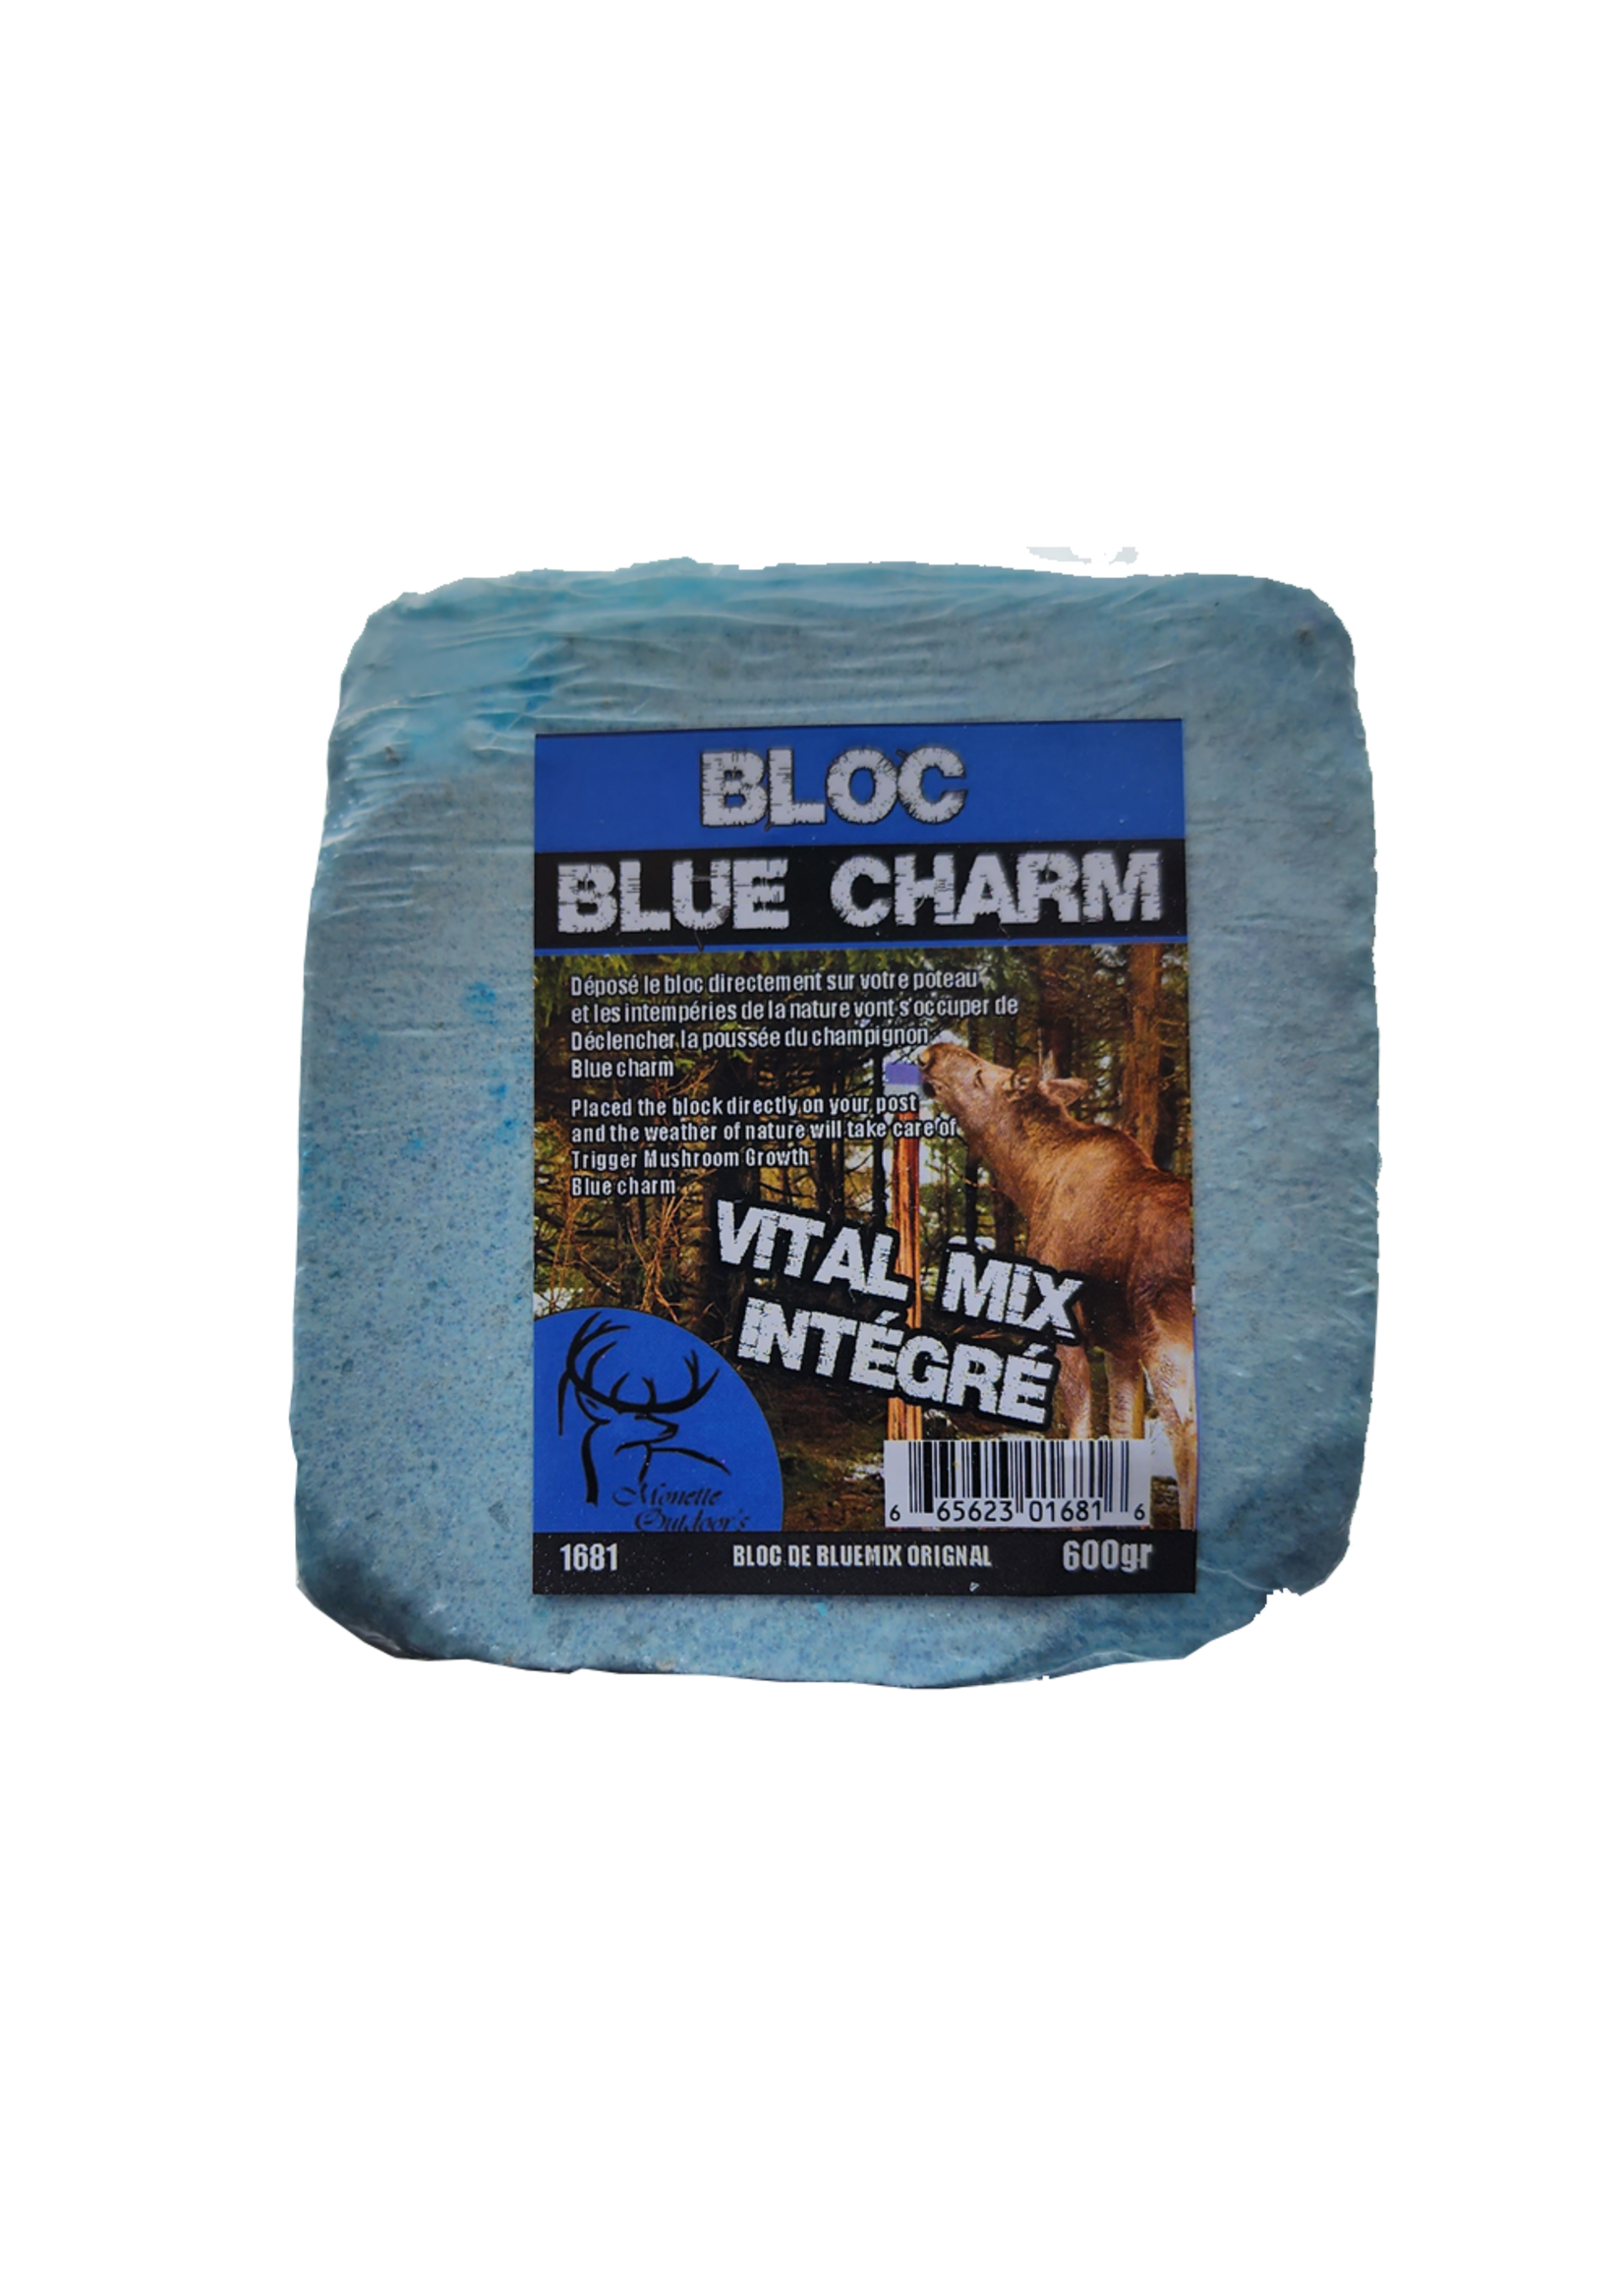 Ferme Monette block blue charm with vital mix for moose